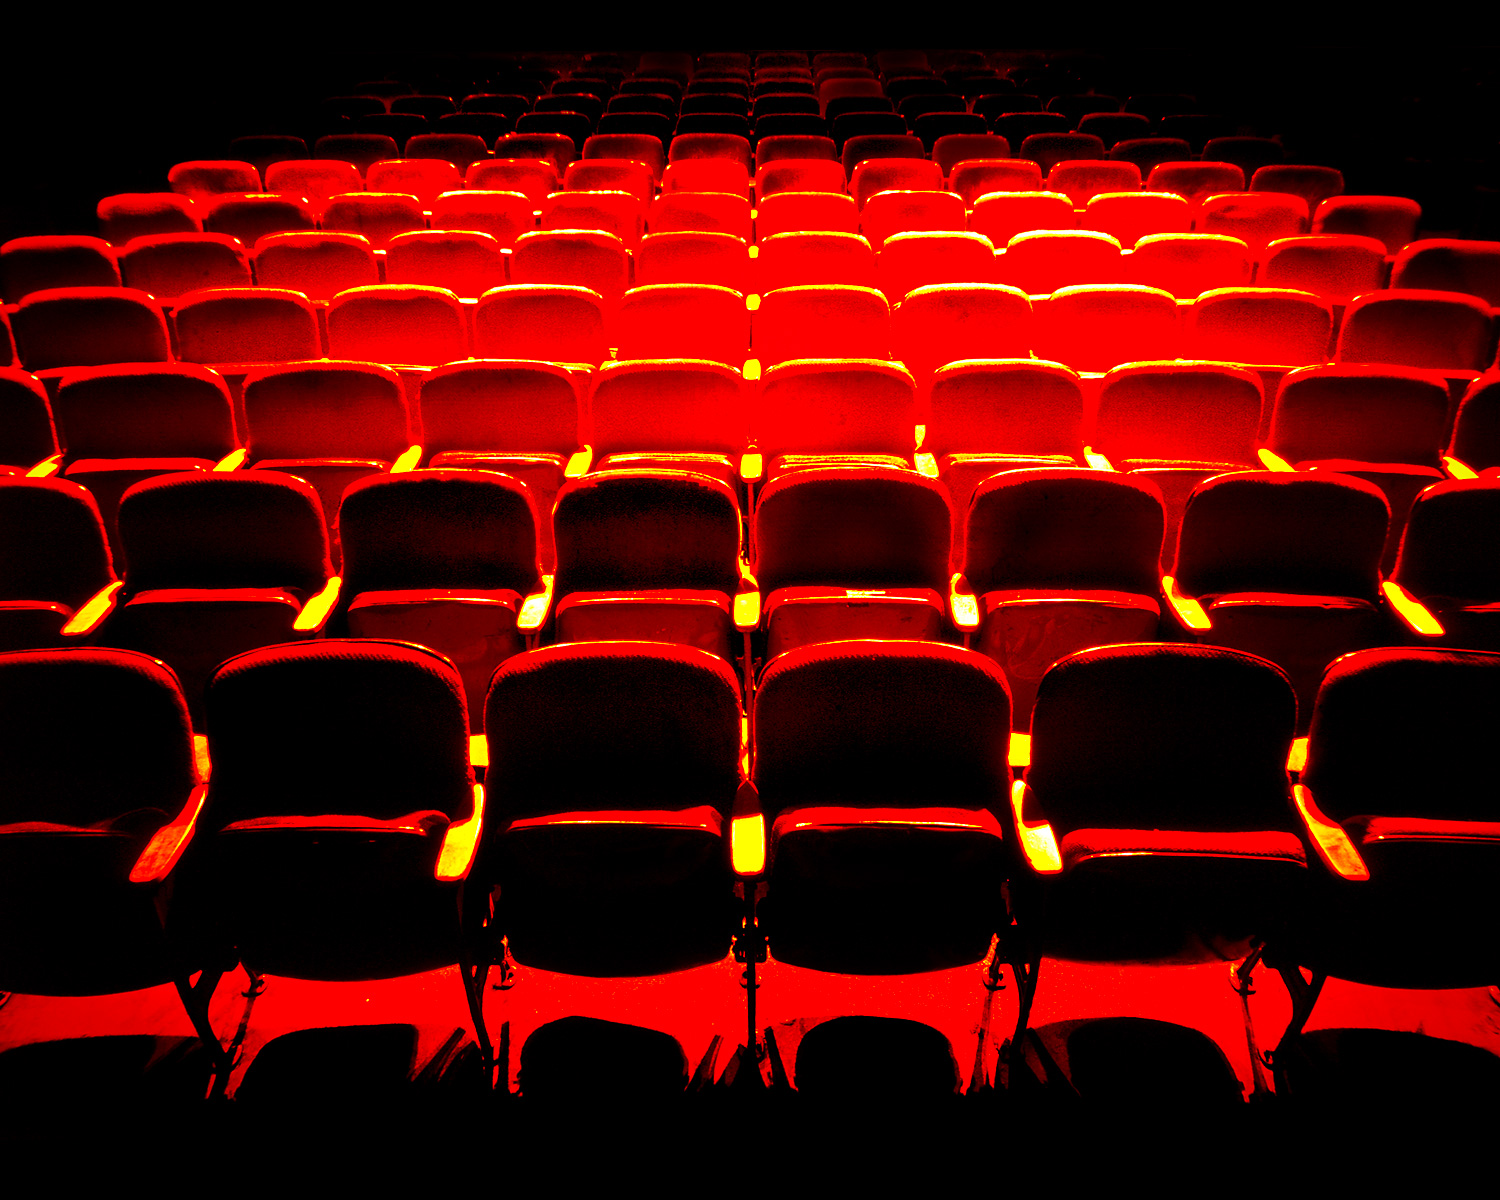 red_seats-4x5-stephen-austin-welch-director-photographer